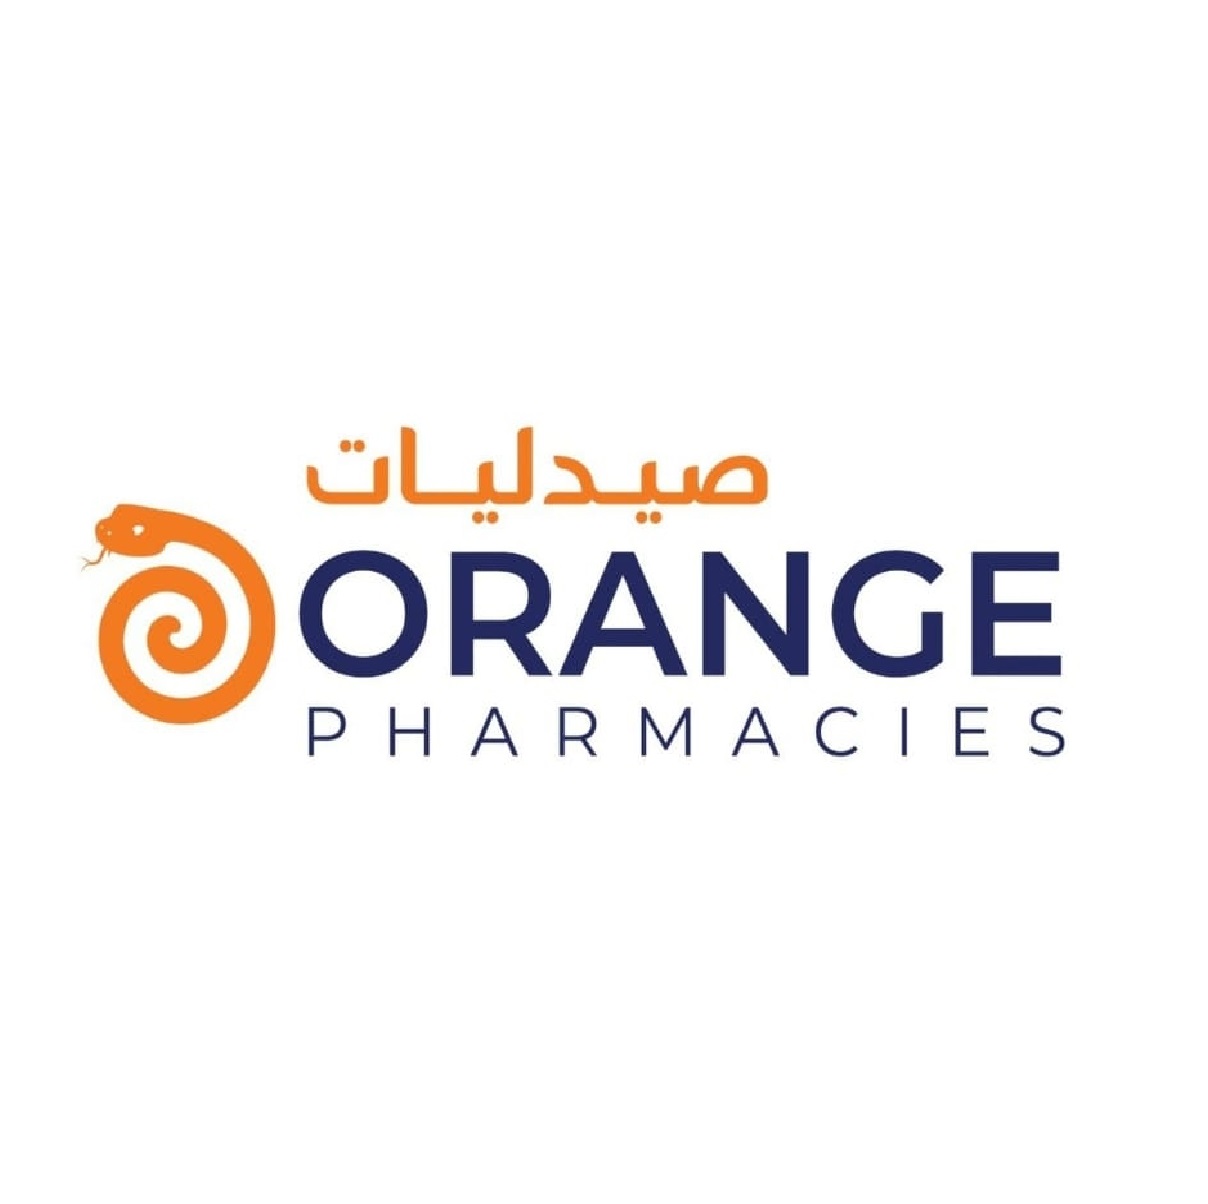 Orange Pharmacies